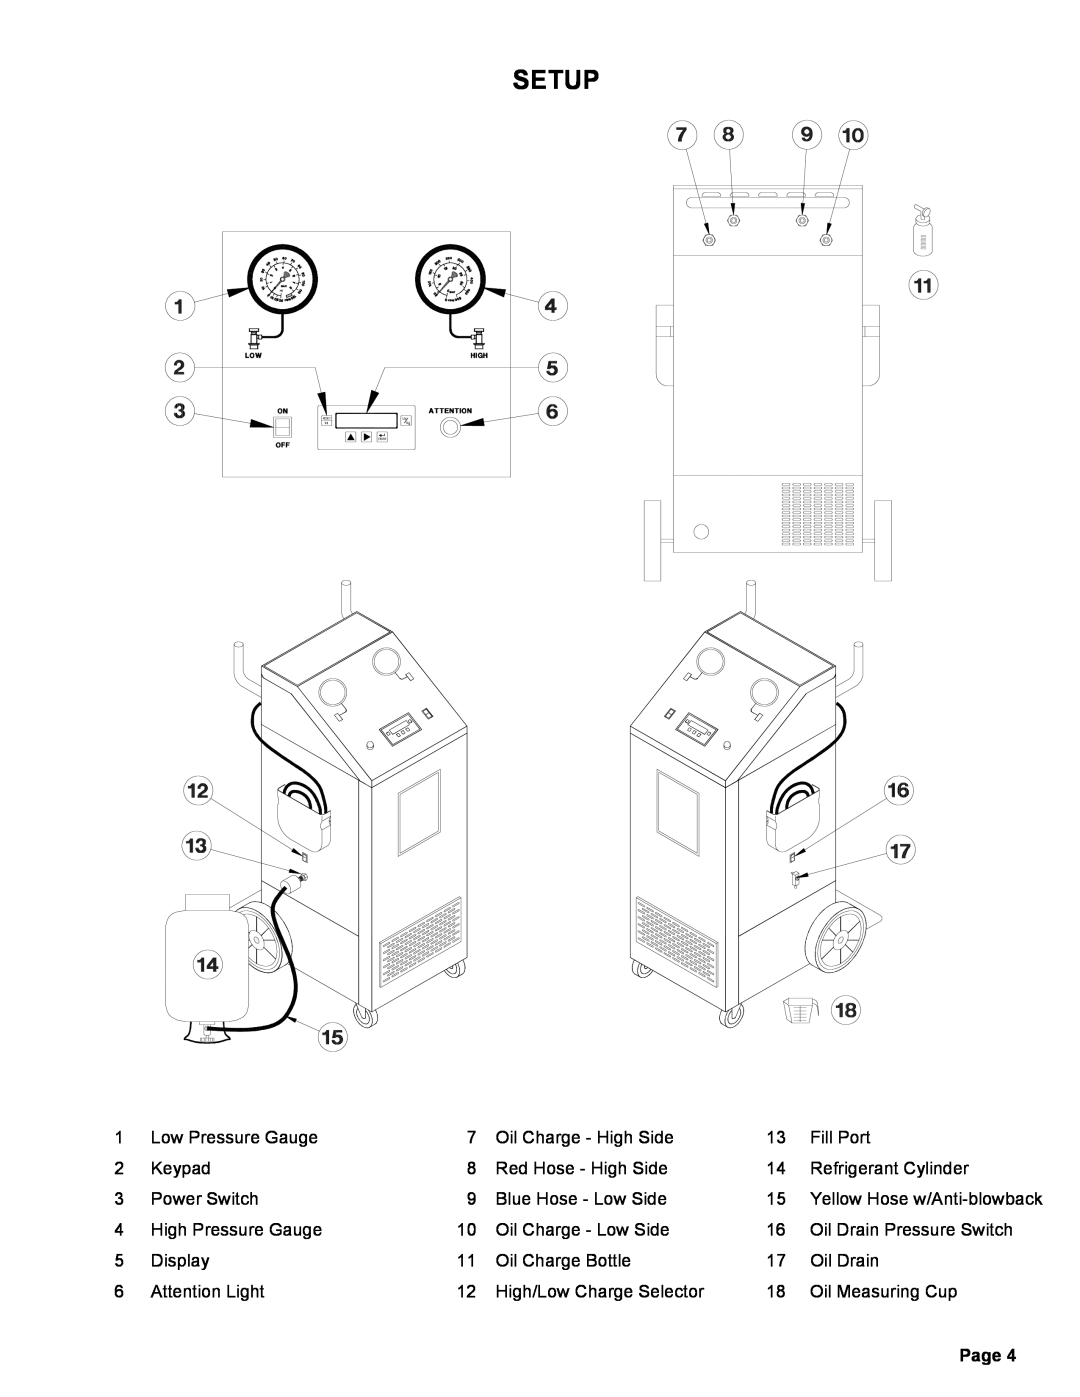 Sharp AC880 system manual Setup, Page 